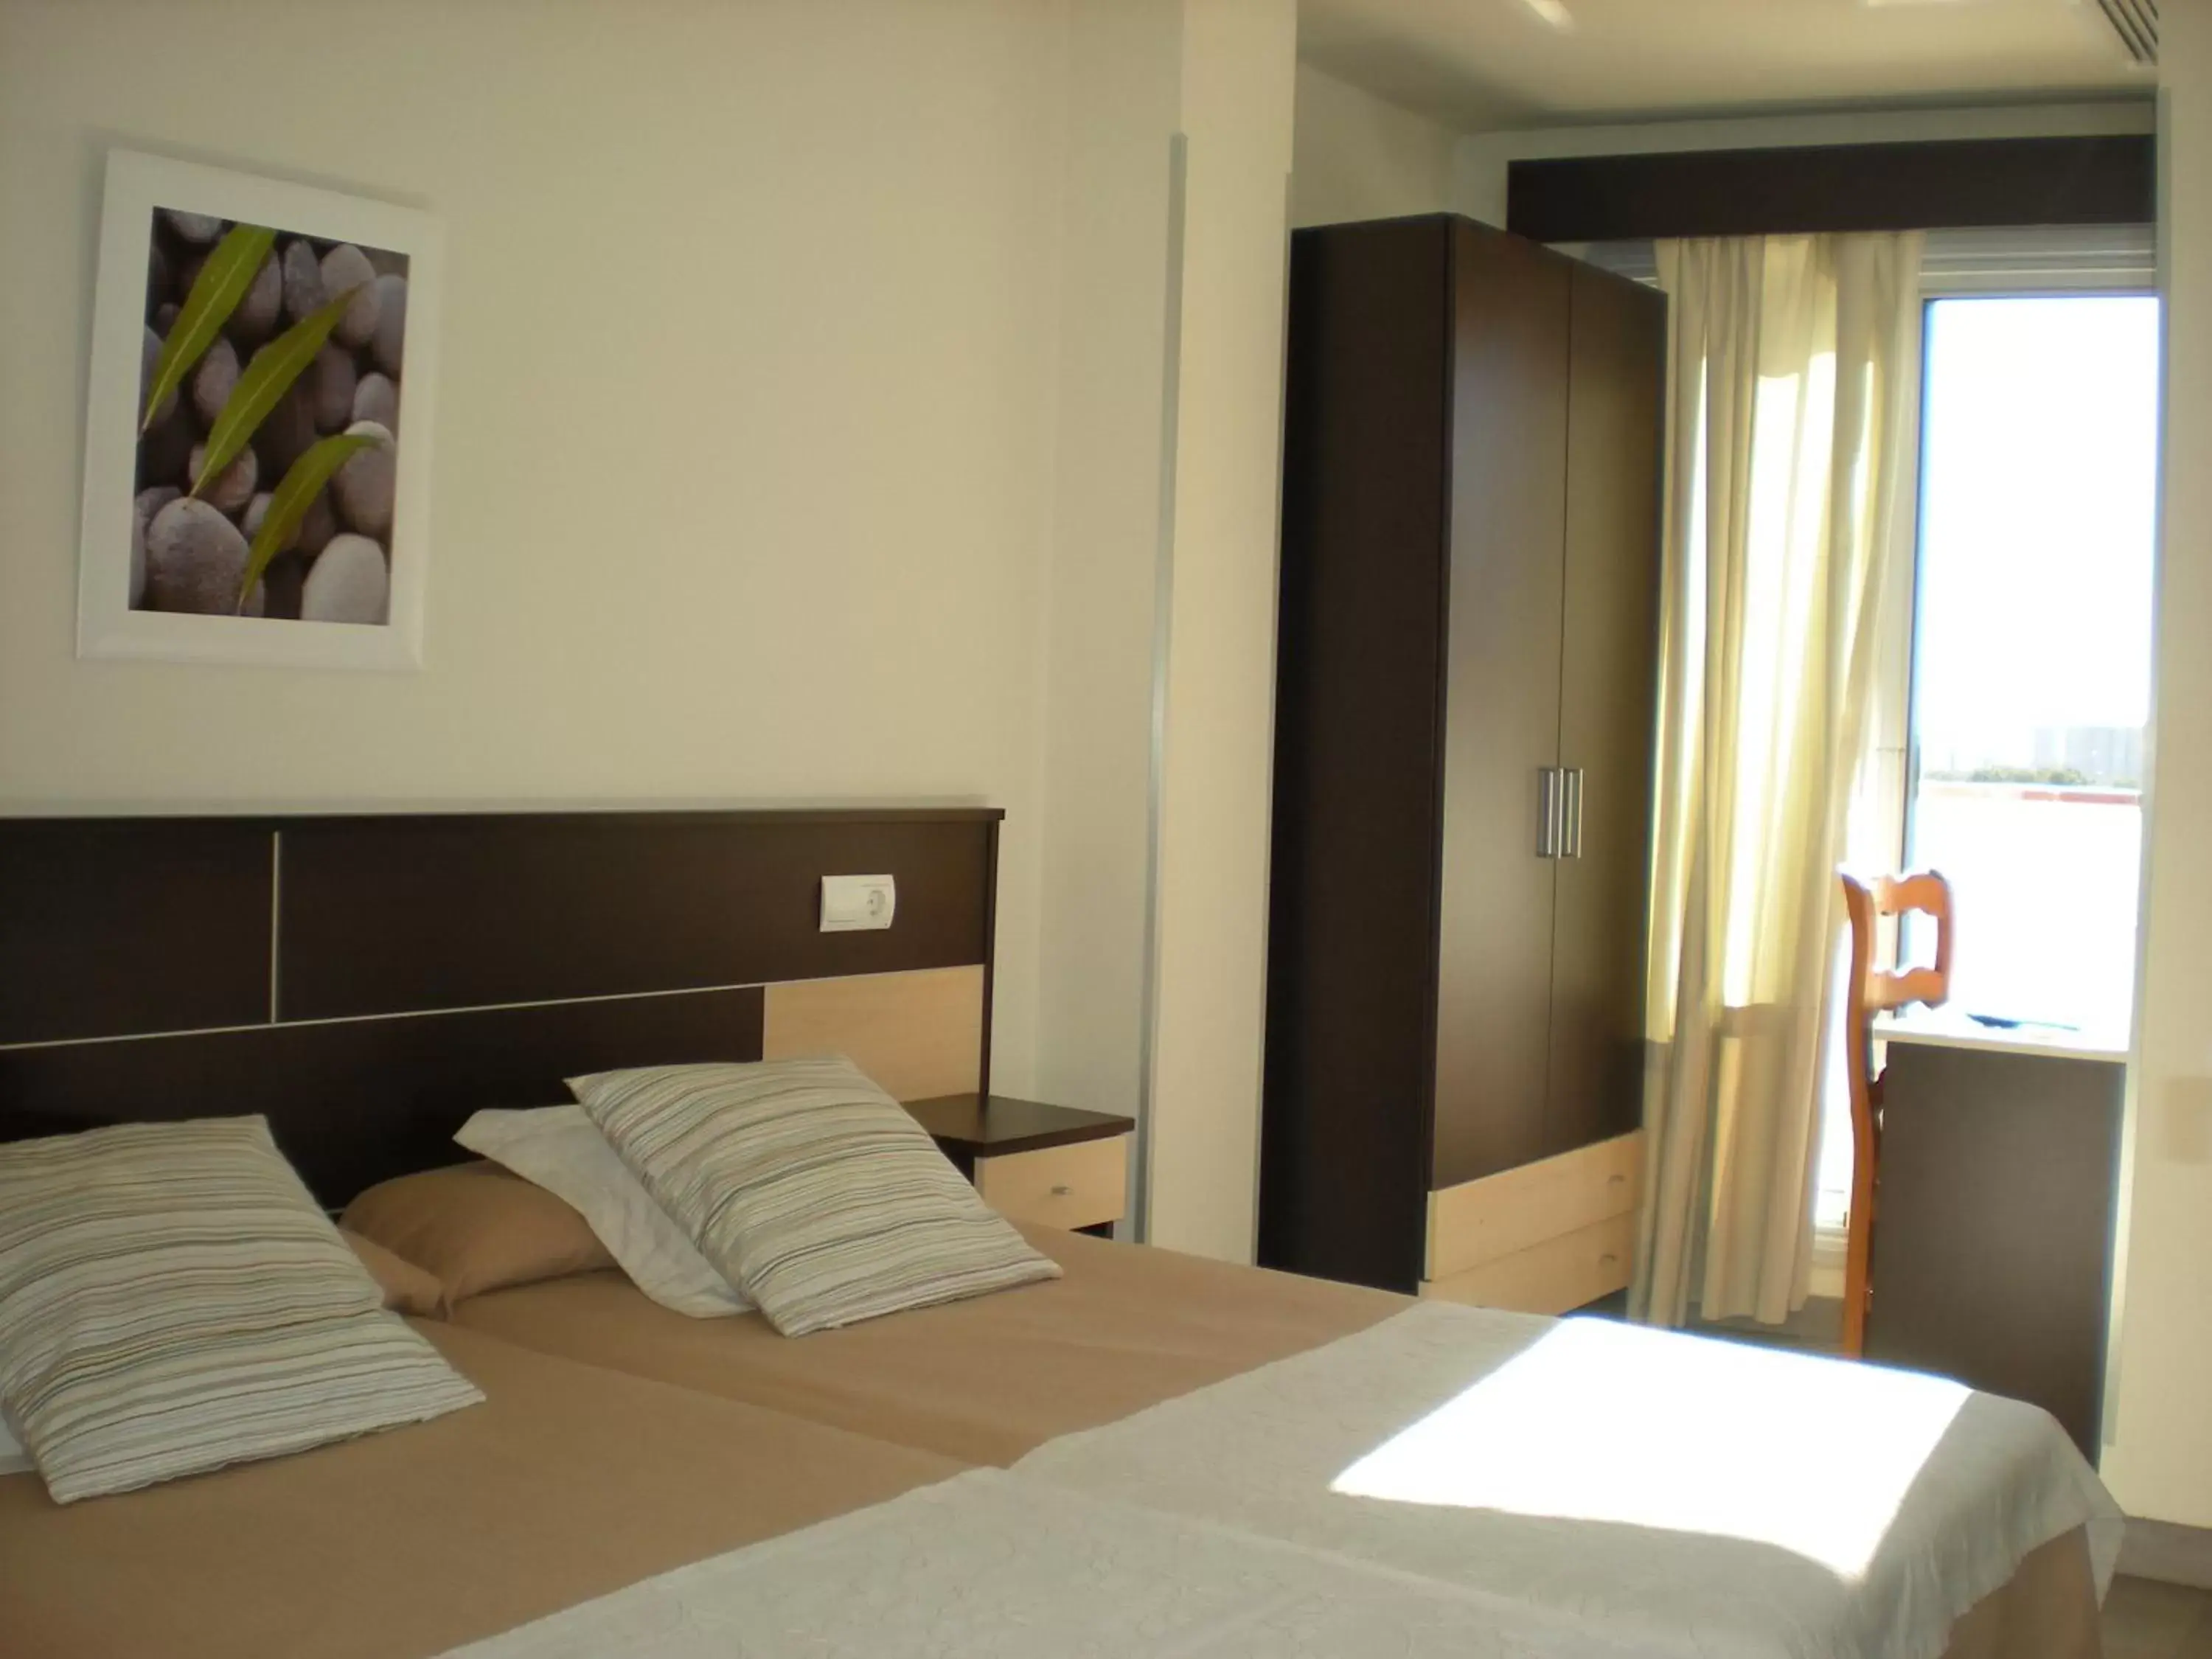 Bedroom, Room Photo in Hotel MR